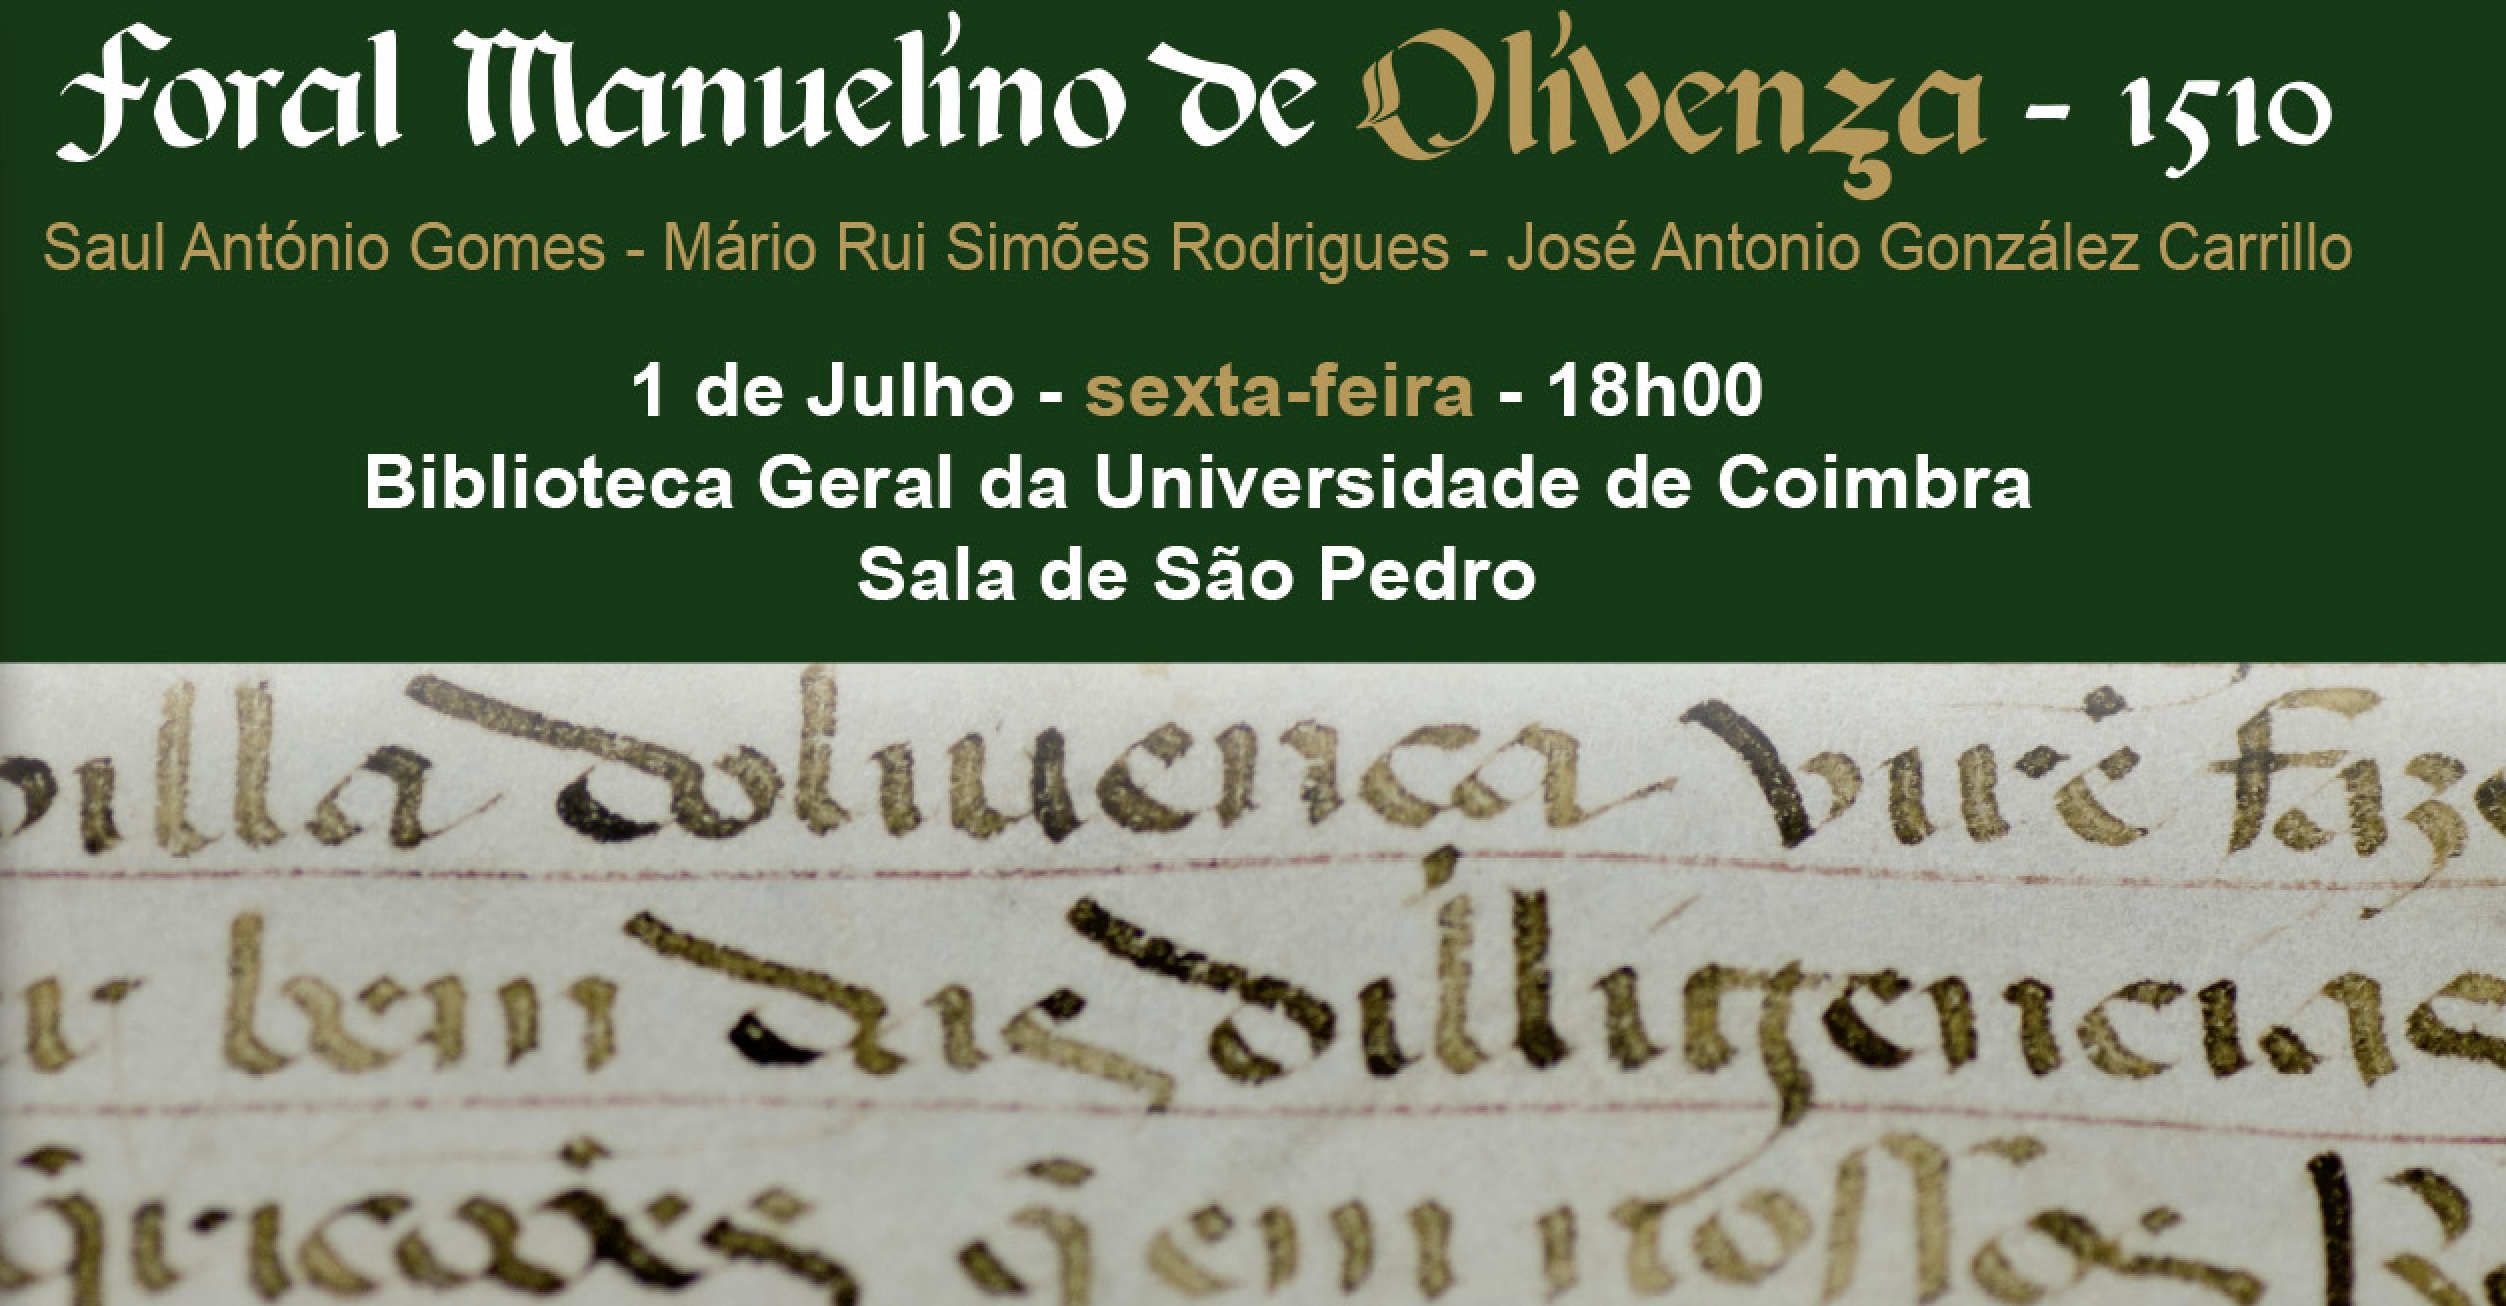 Presentation of the book Foral manuelino de Olivença 1510